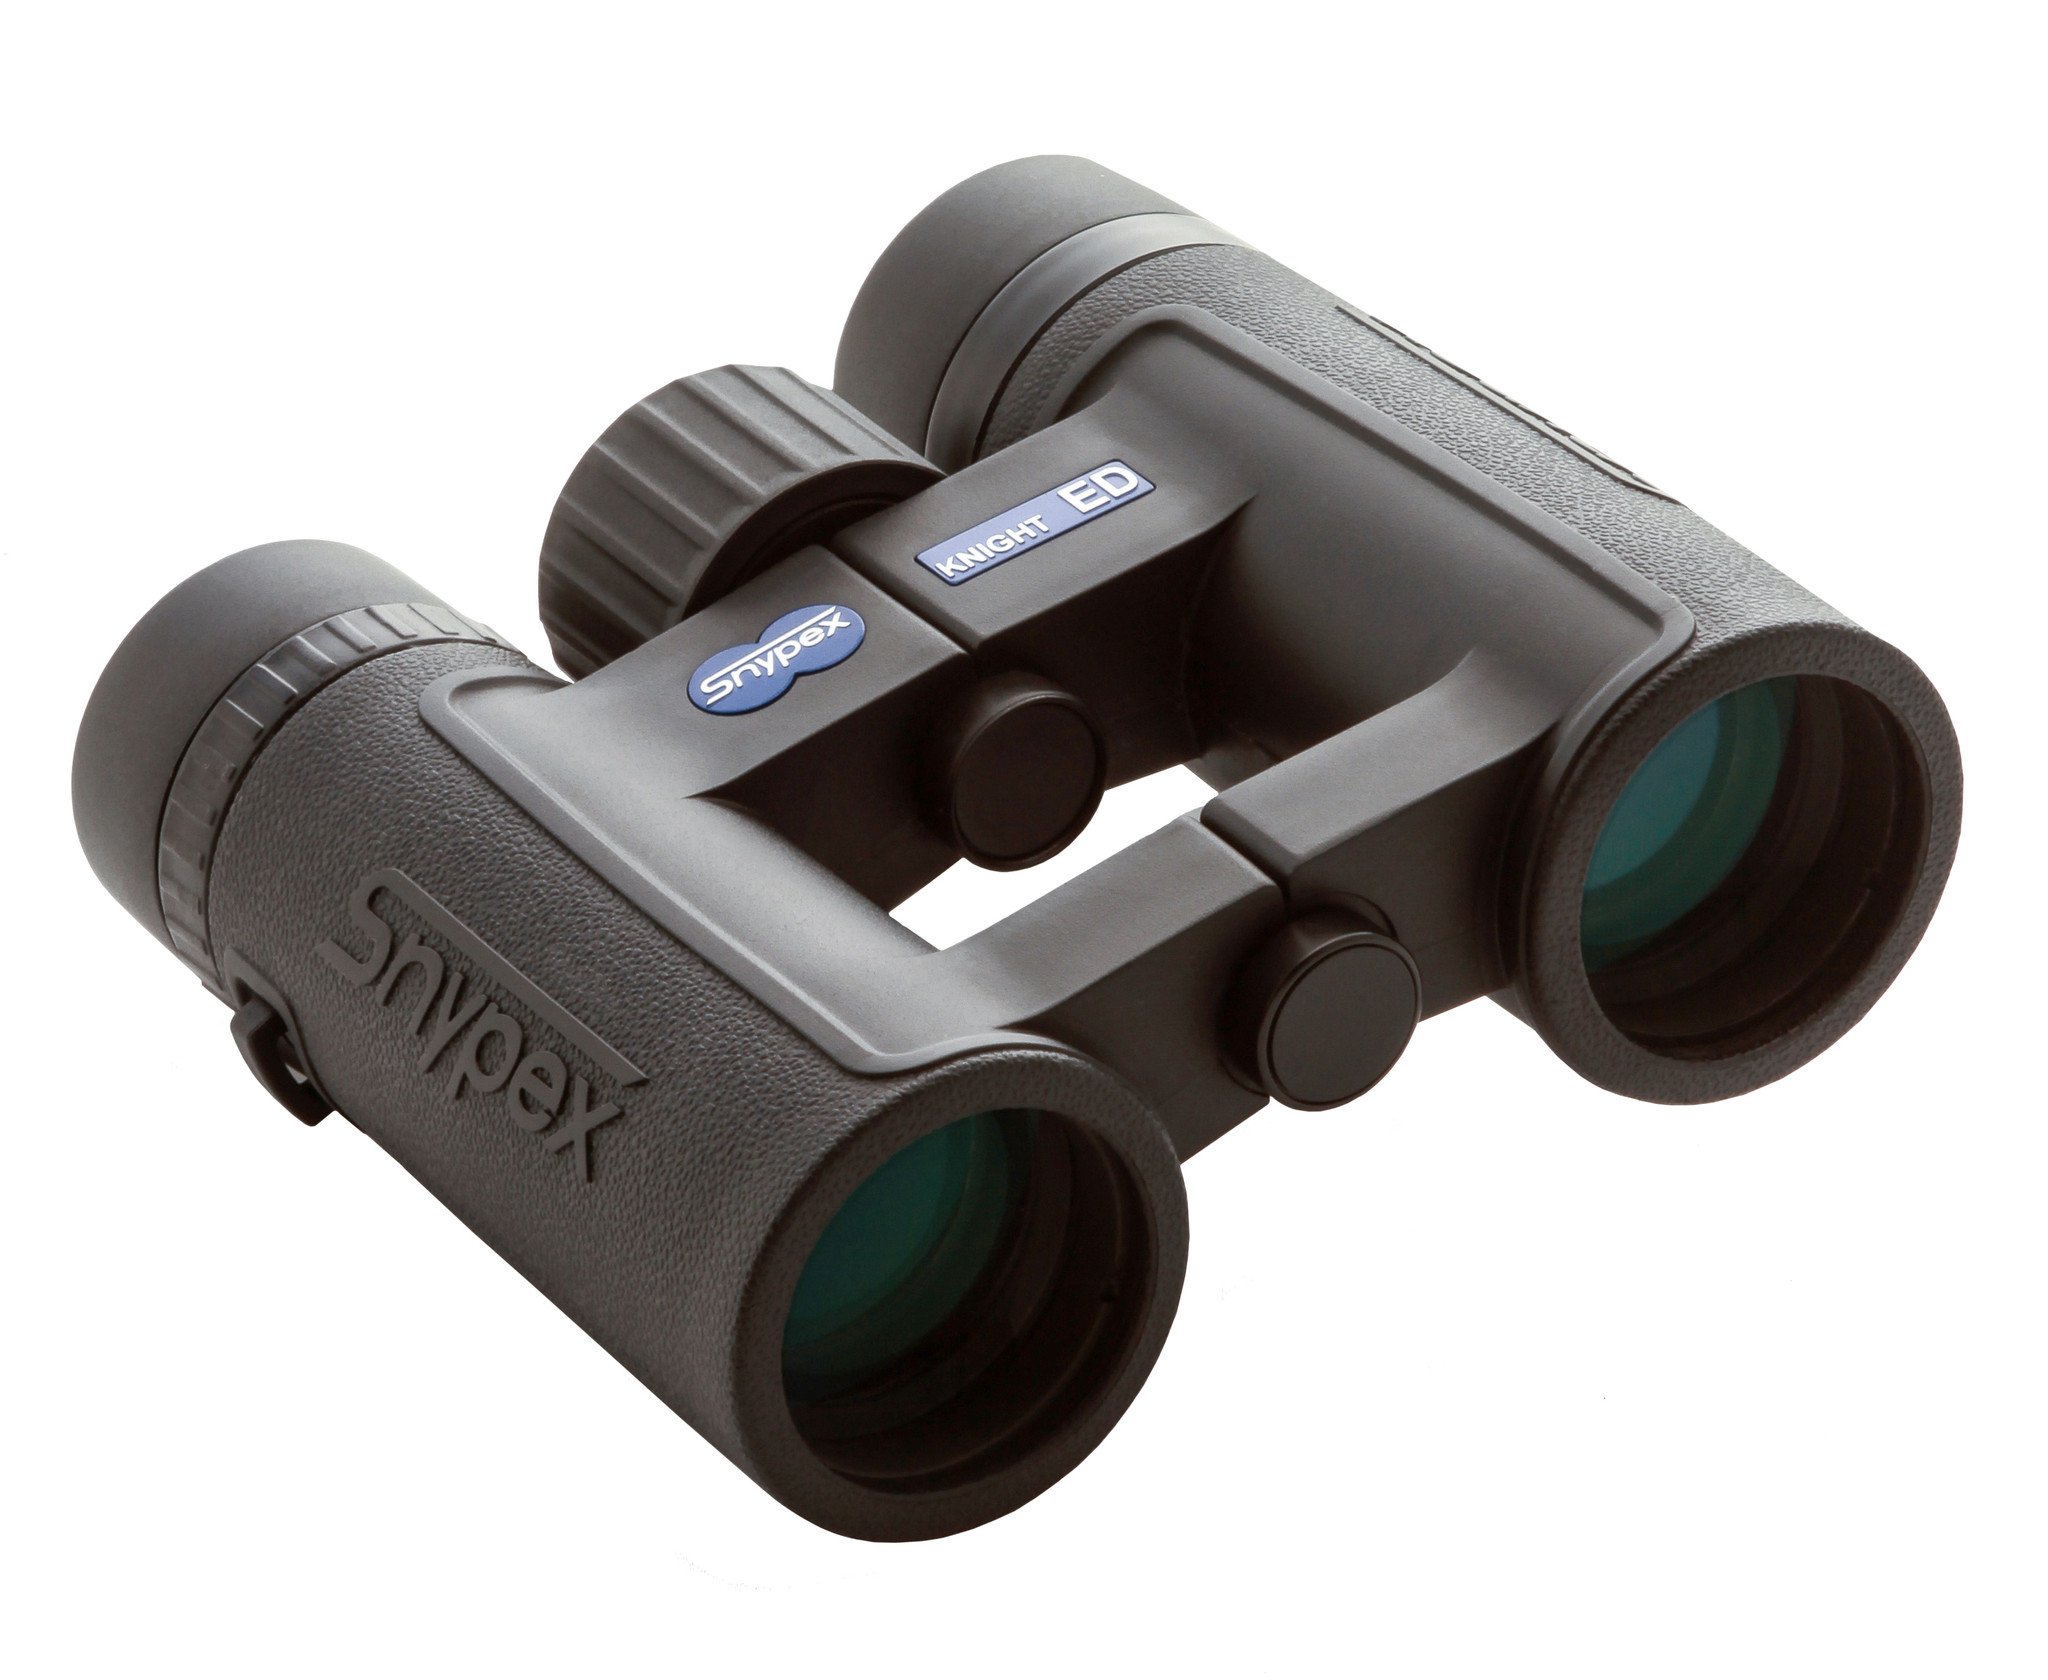 SNYPEX Knight ED 10 X32 mm Birdwatching , for all outdoor activity binocular